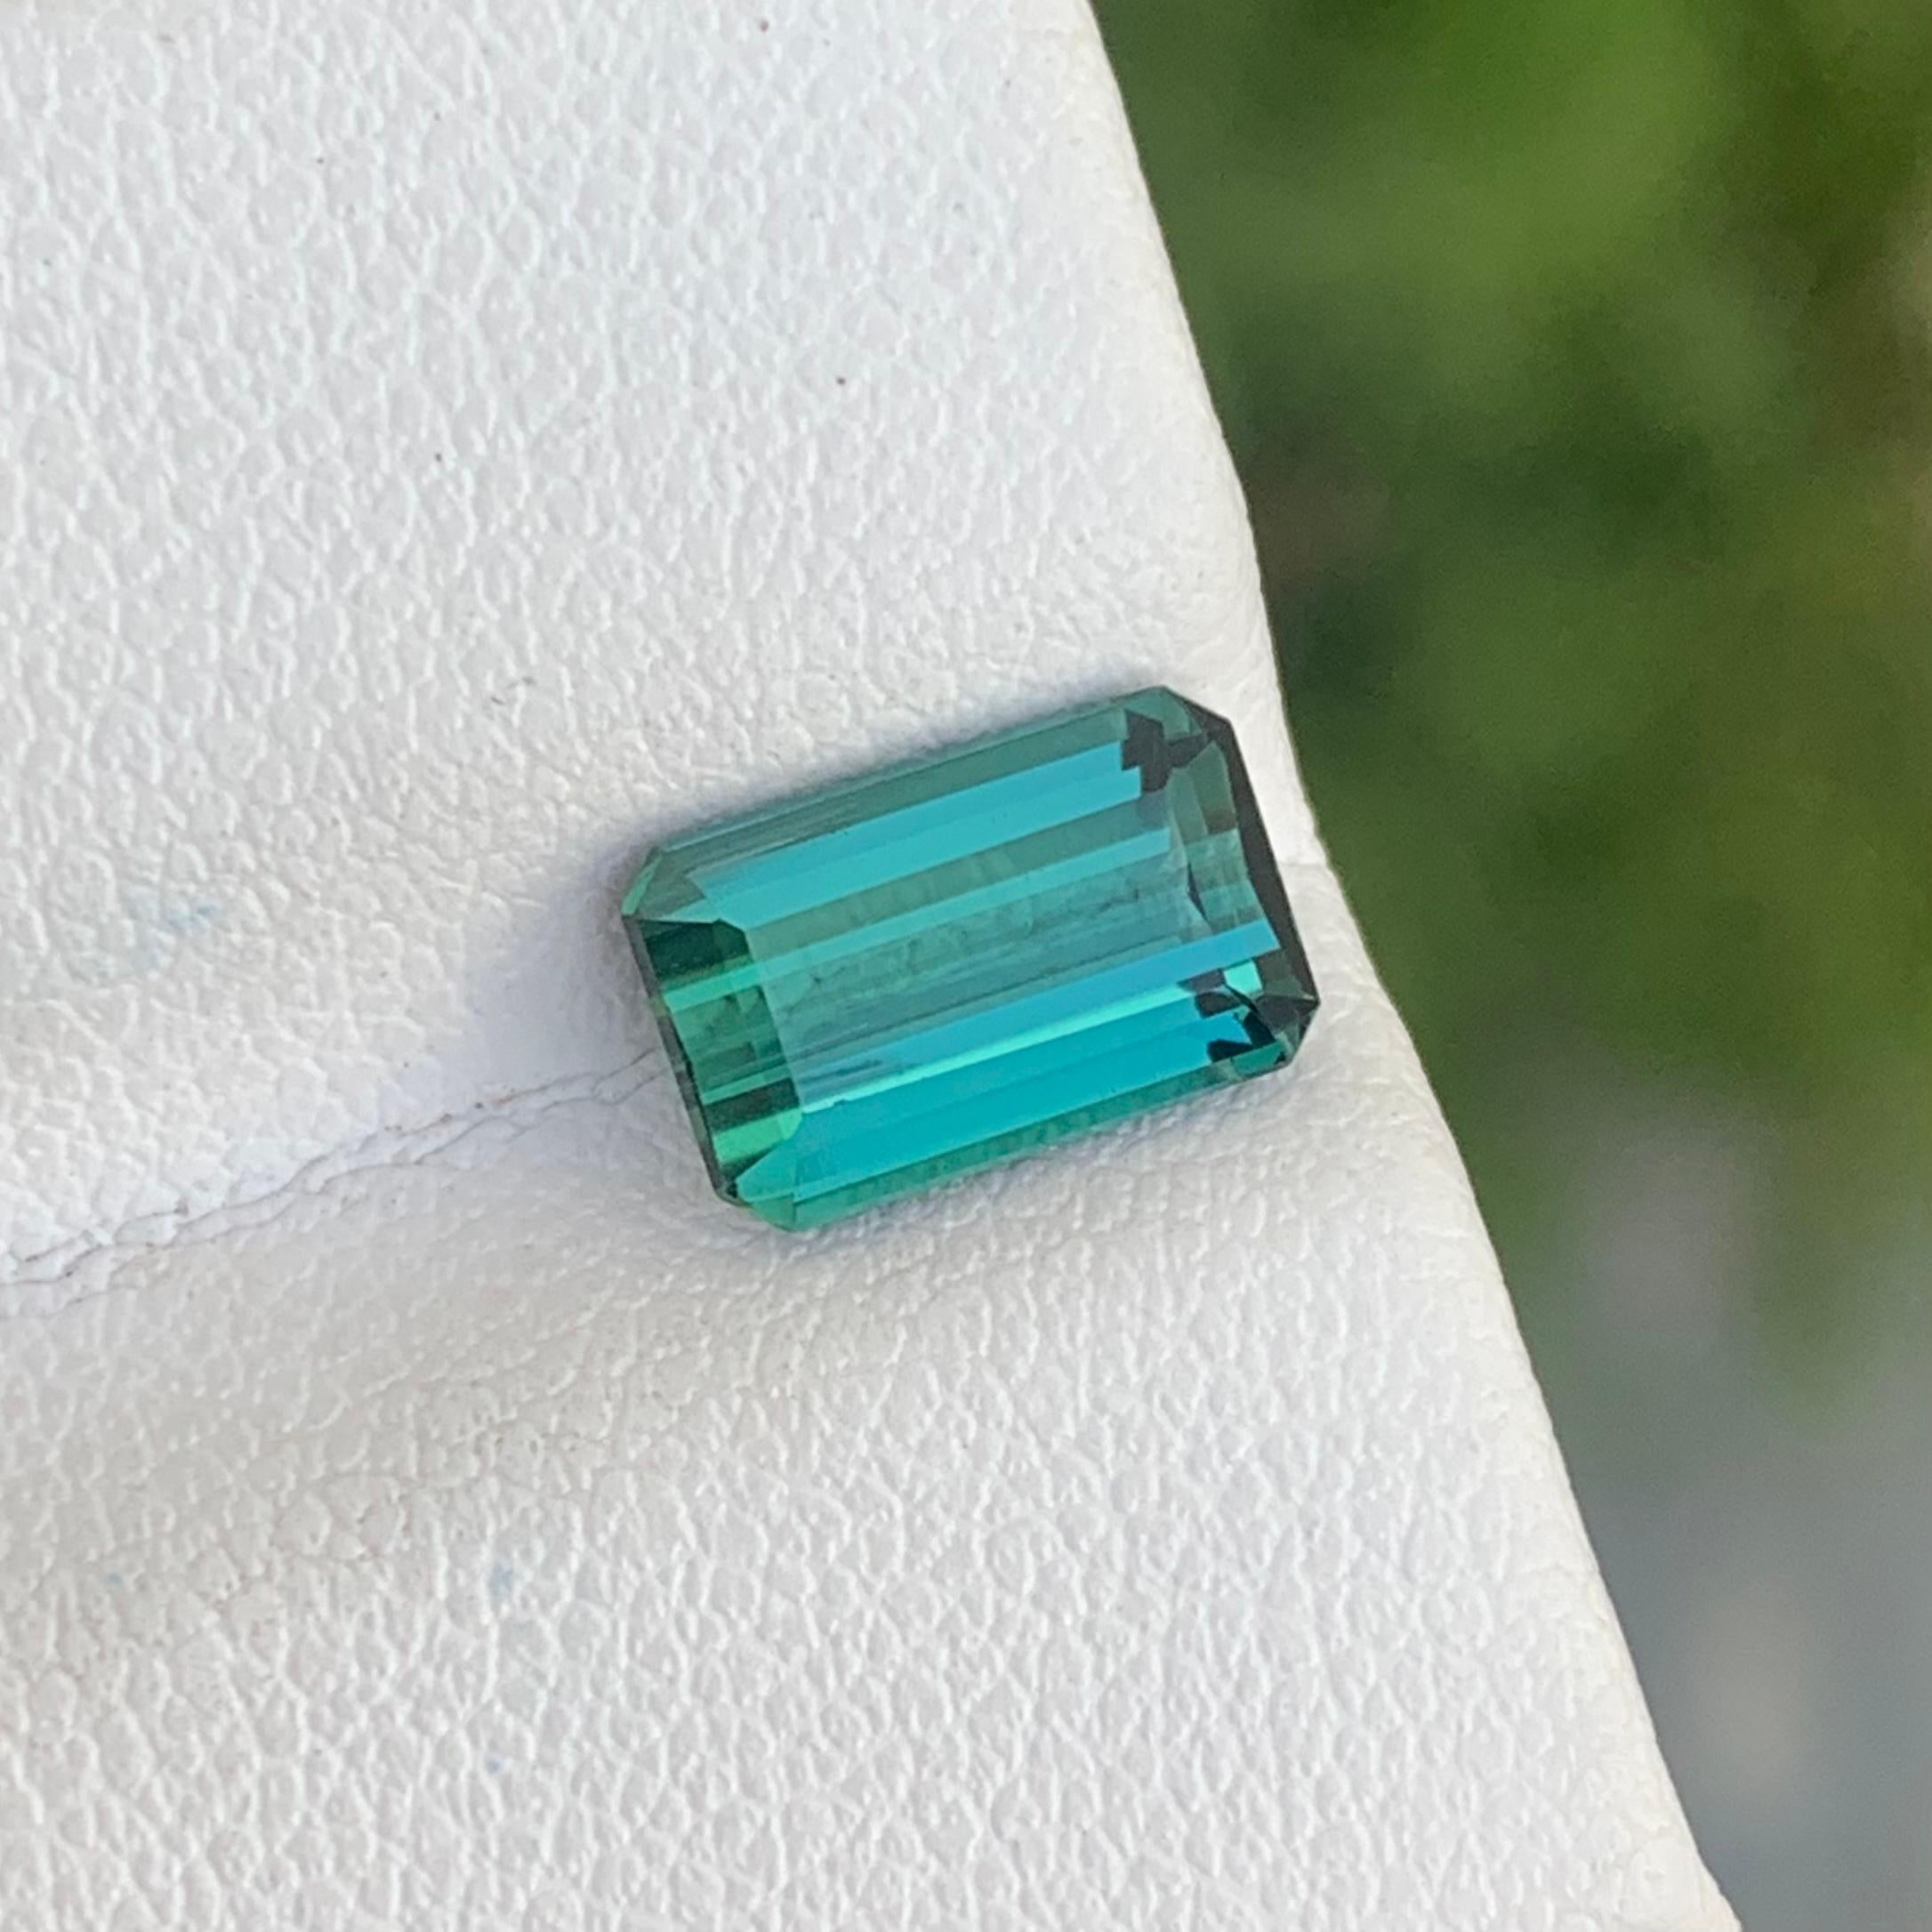 Genuine 1.90 Carat Natural Loose Indicolite Tourmaline Emerald Cut Gemstone For Sale 2